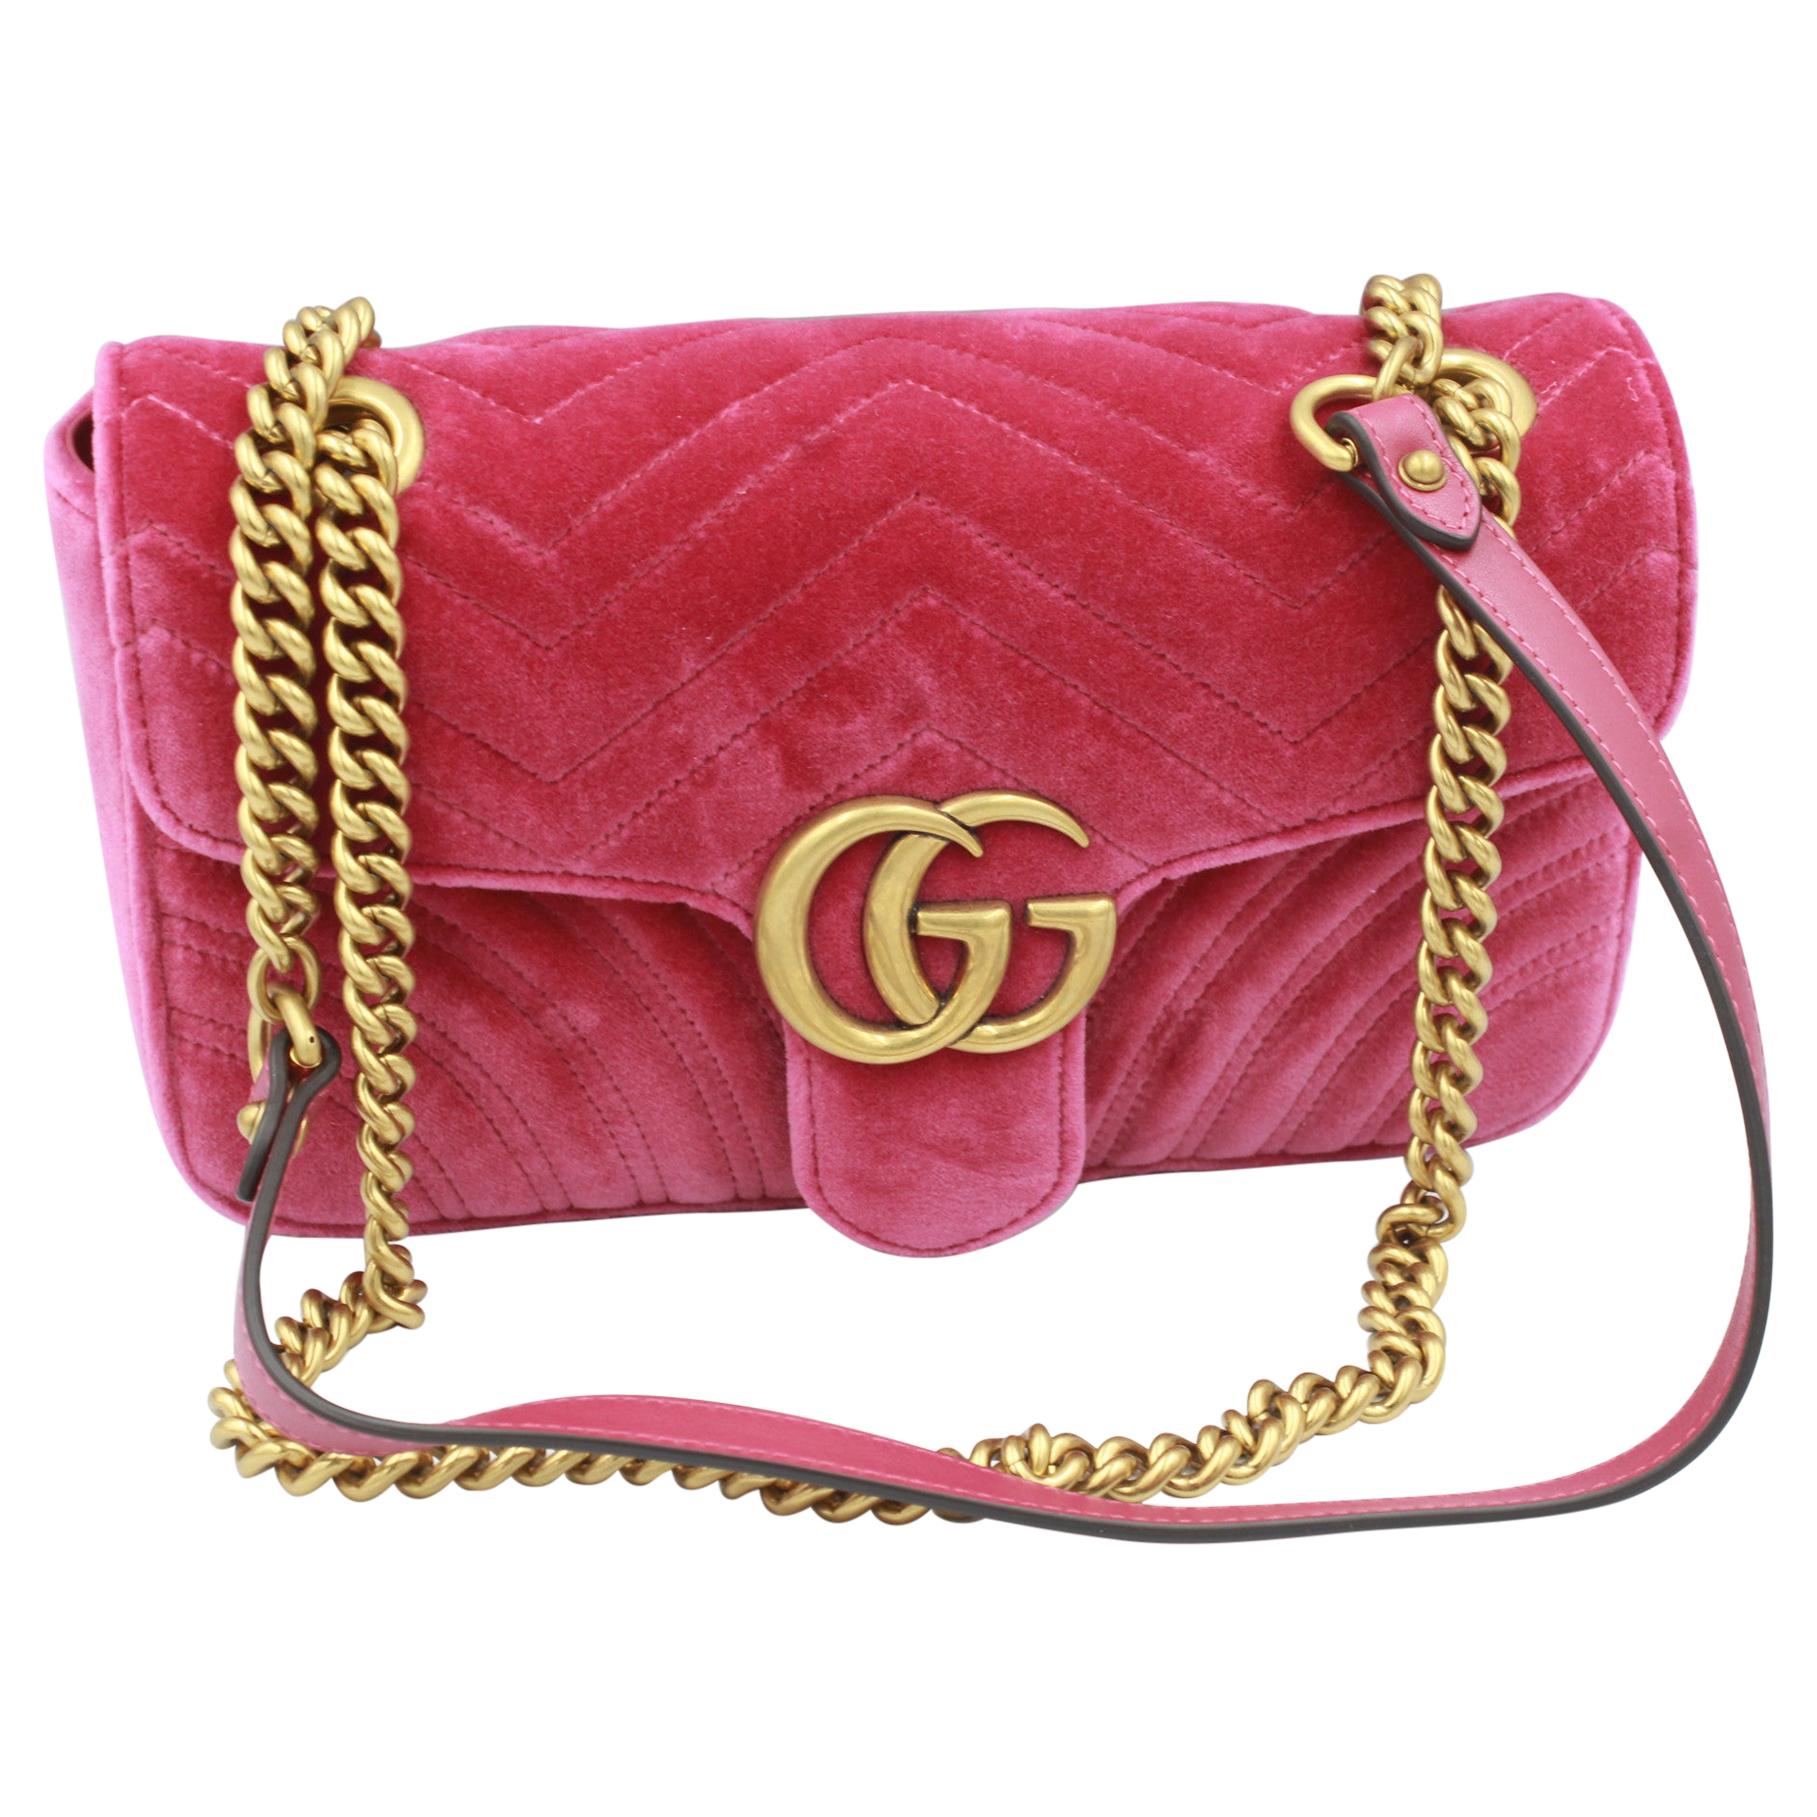 Gucci Marmont GG handbag in pink velvet.